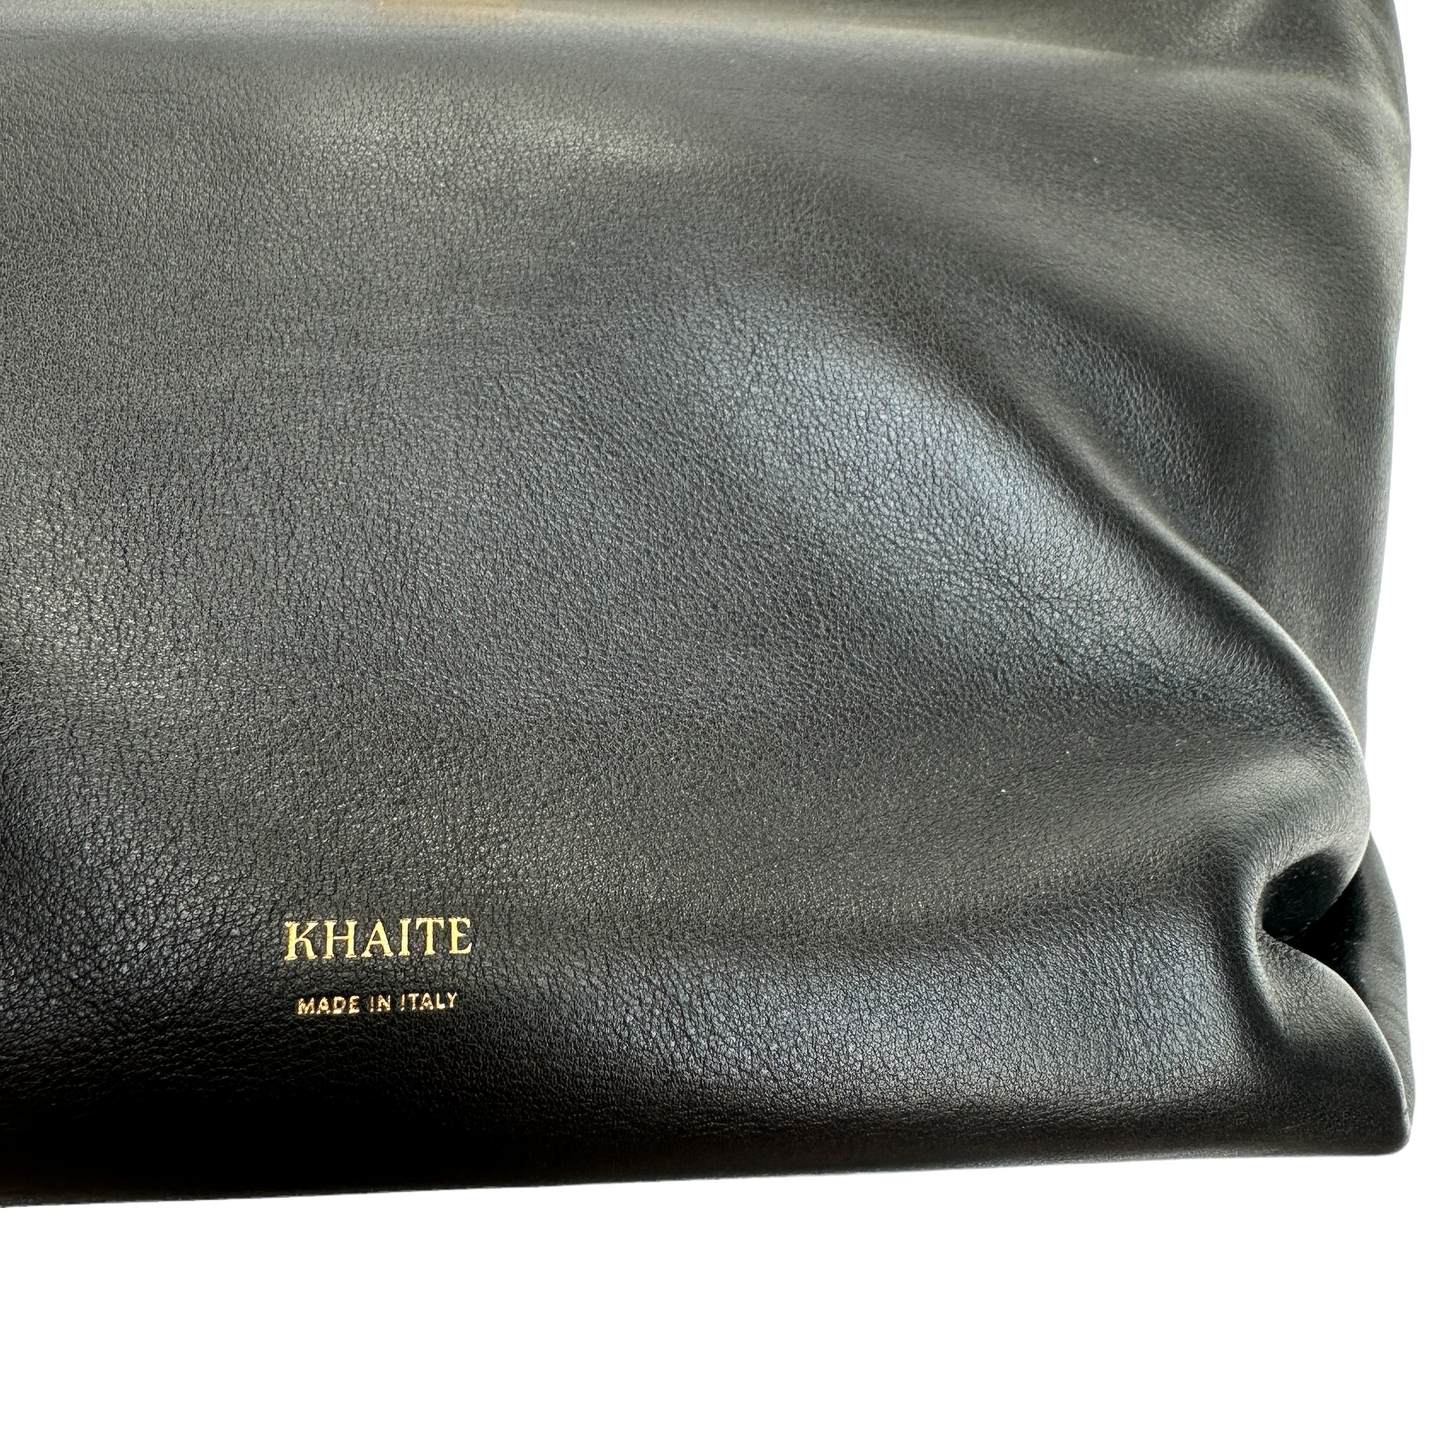 Black Leather Crossbody Bag